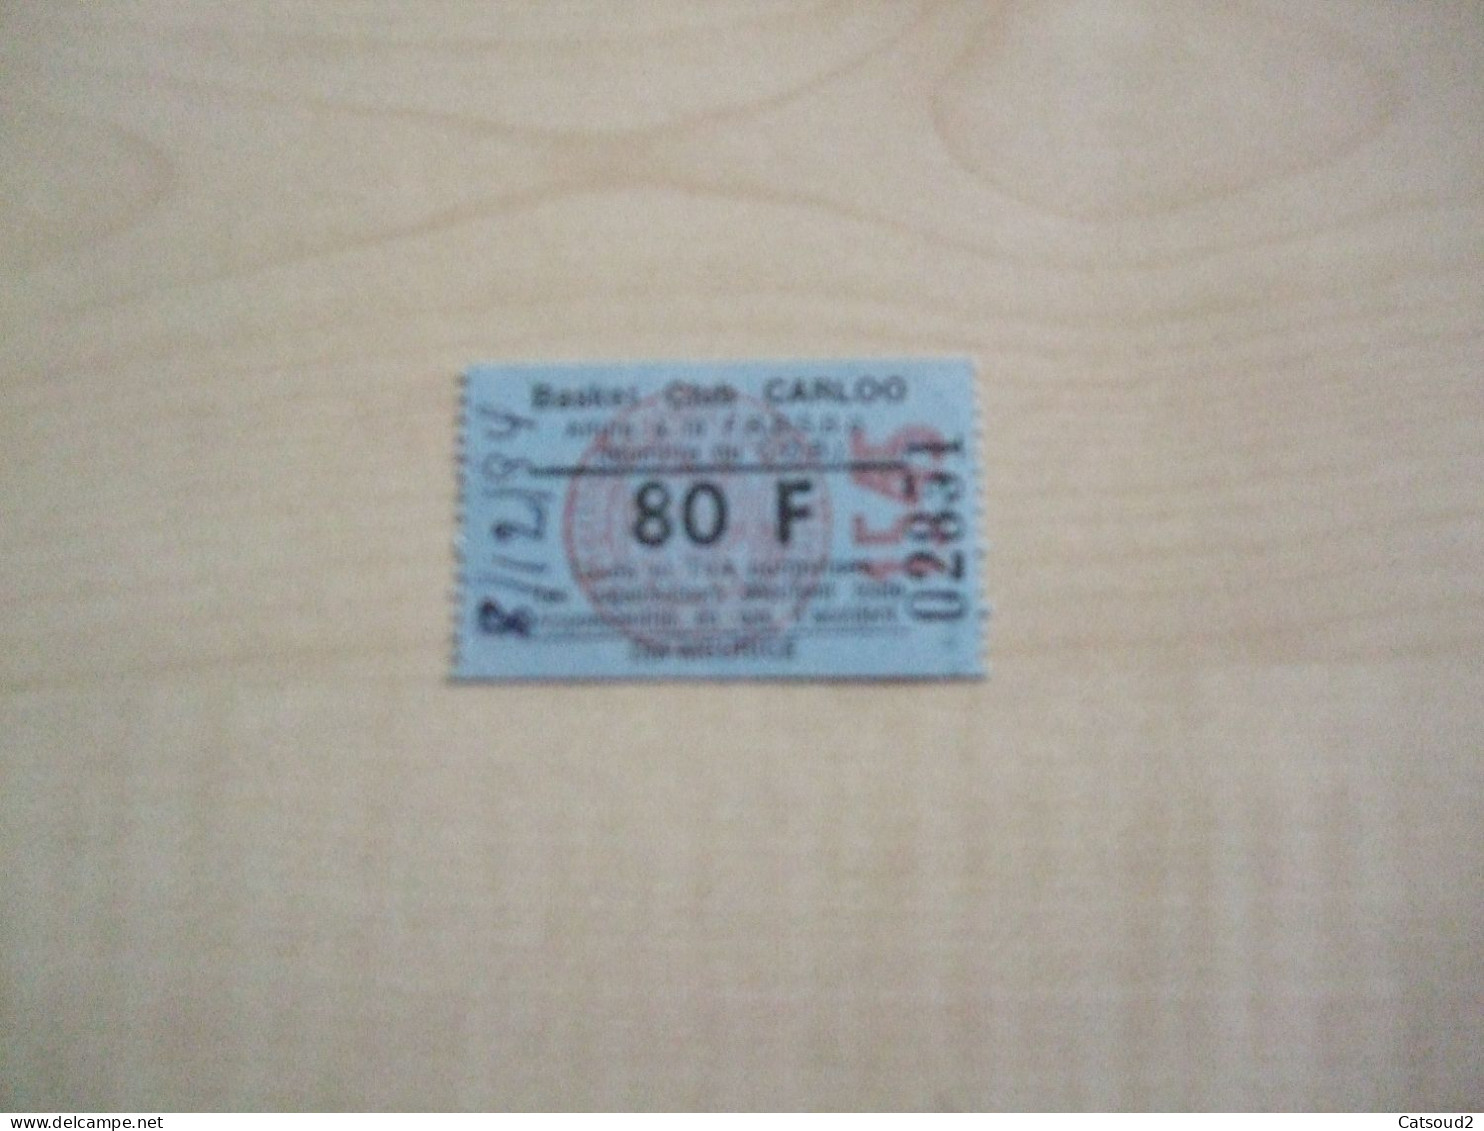 Ancien Ticket BASKET CLUB CARLOO - Tickets D'entrée